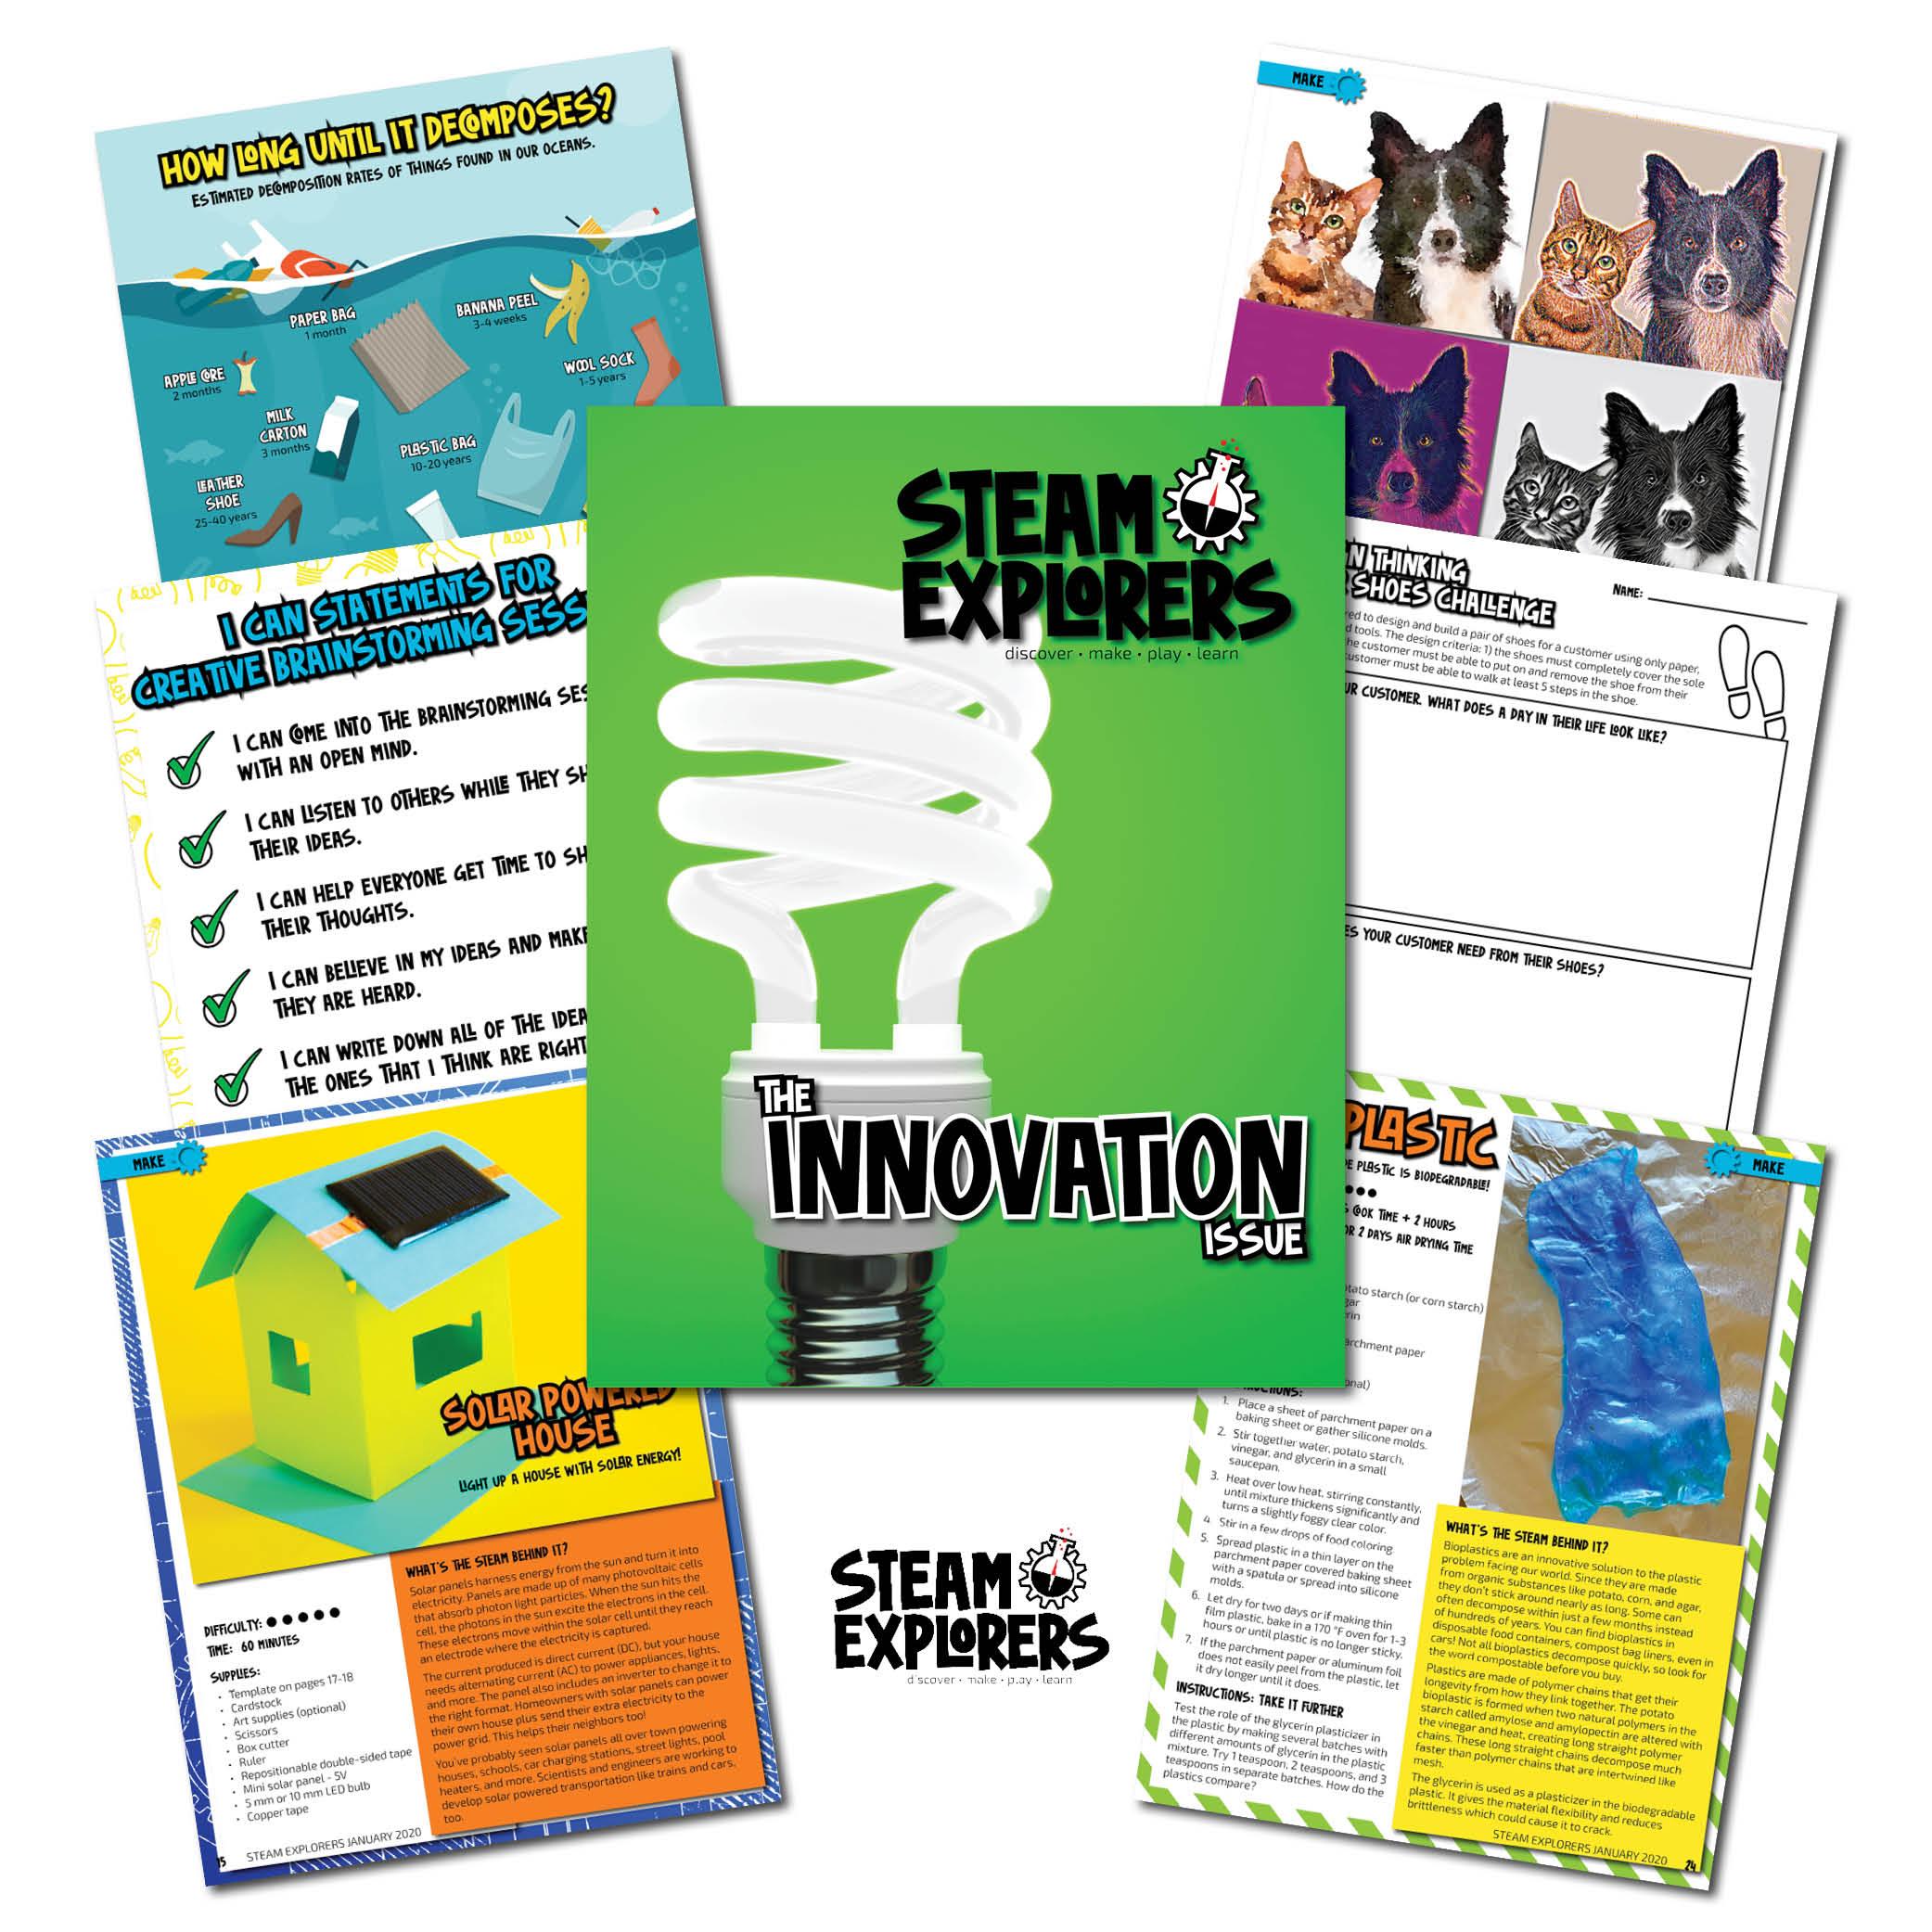 Whats Inside - January 2020 Innovation STEAM Explorers Issue - No Copy v2